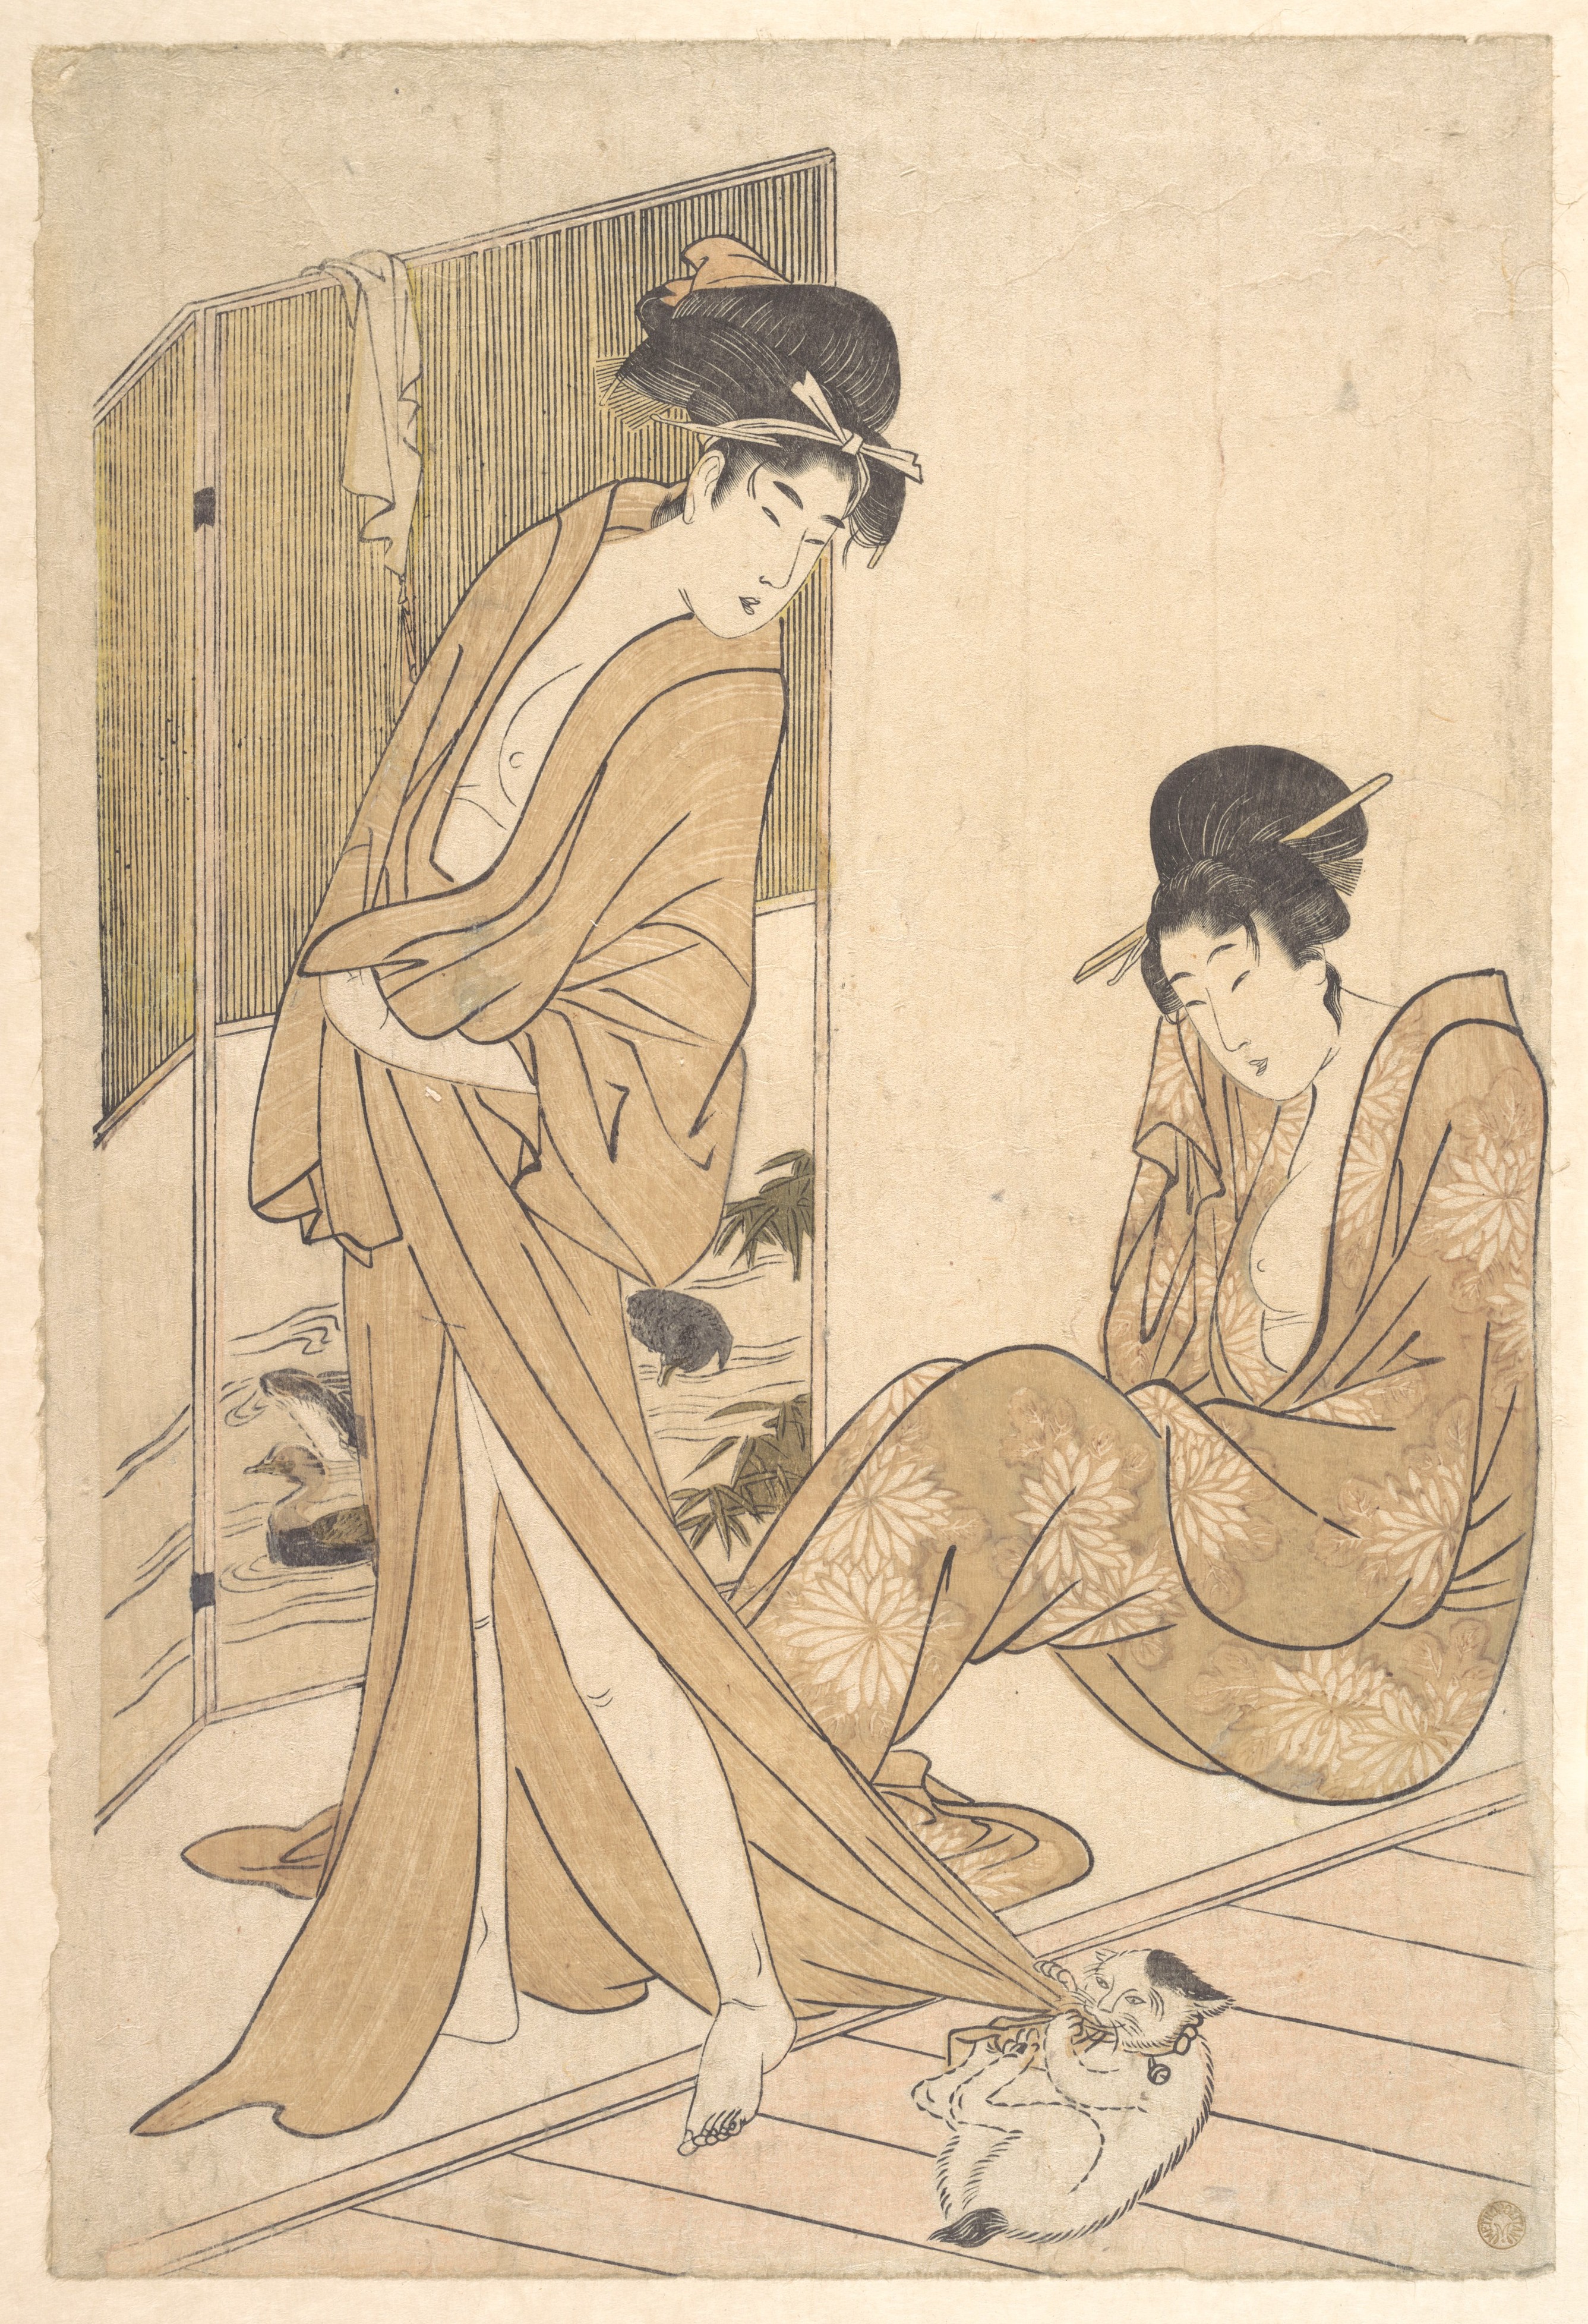 Kitagawa Utamaro Artworks collected in Metmuseum